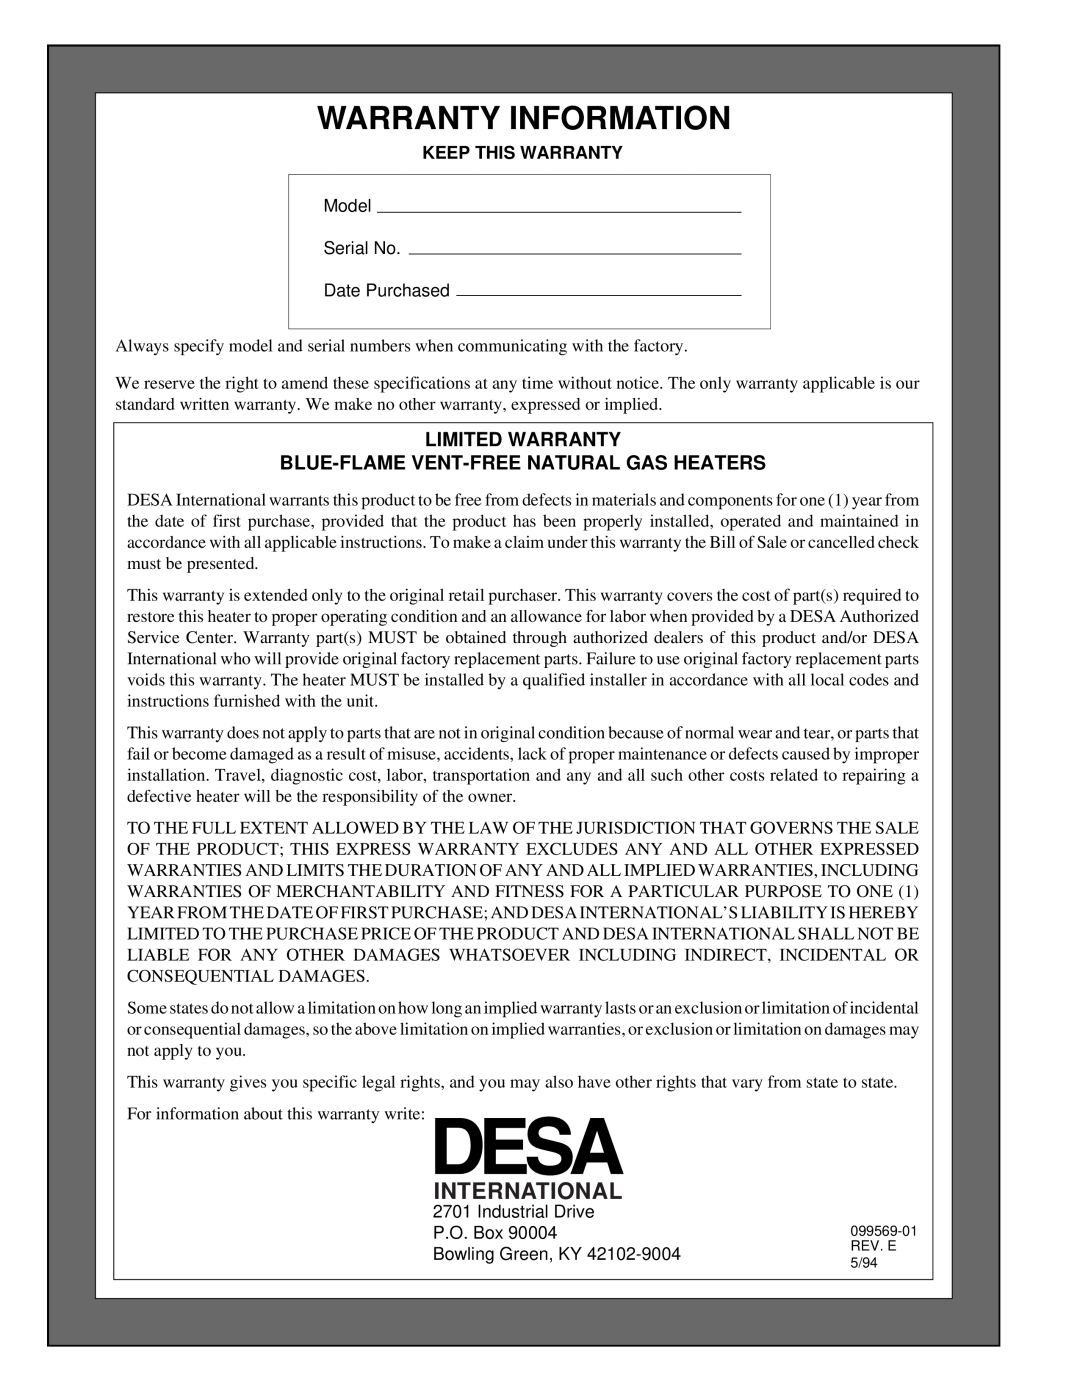 Desa A installation manual Warranty Information, International, Limited Warranty, Blue-Flame Vent-Freenatural Gas Heaters 